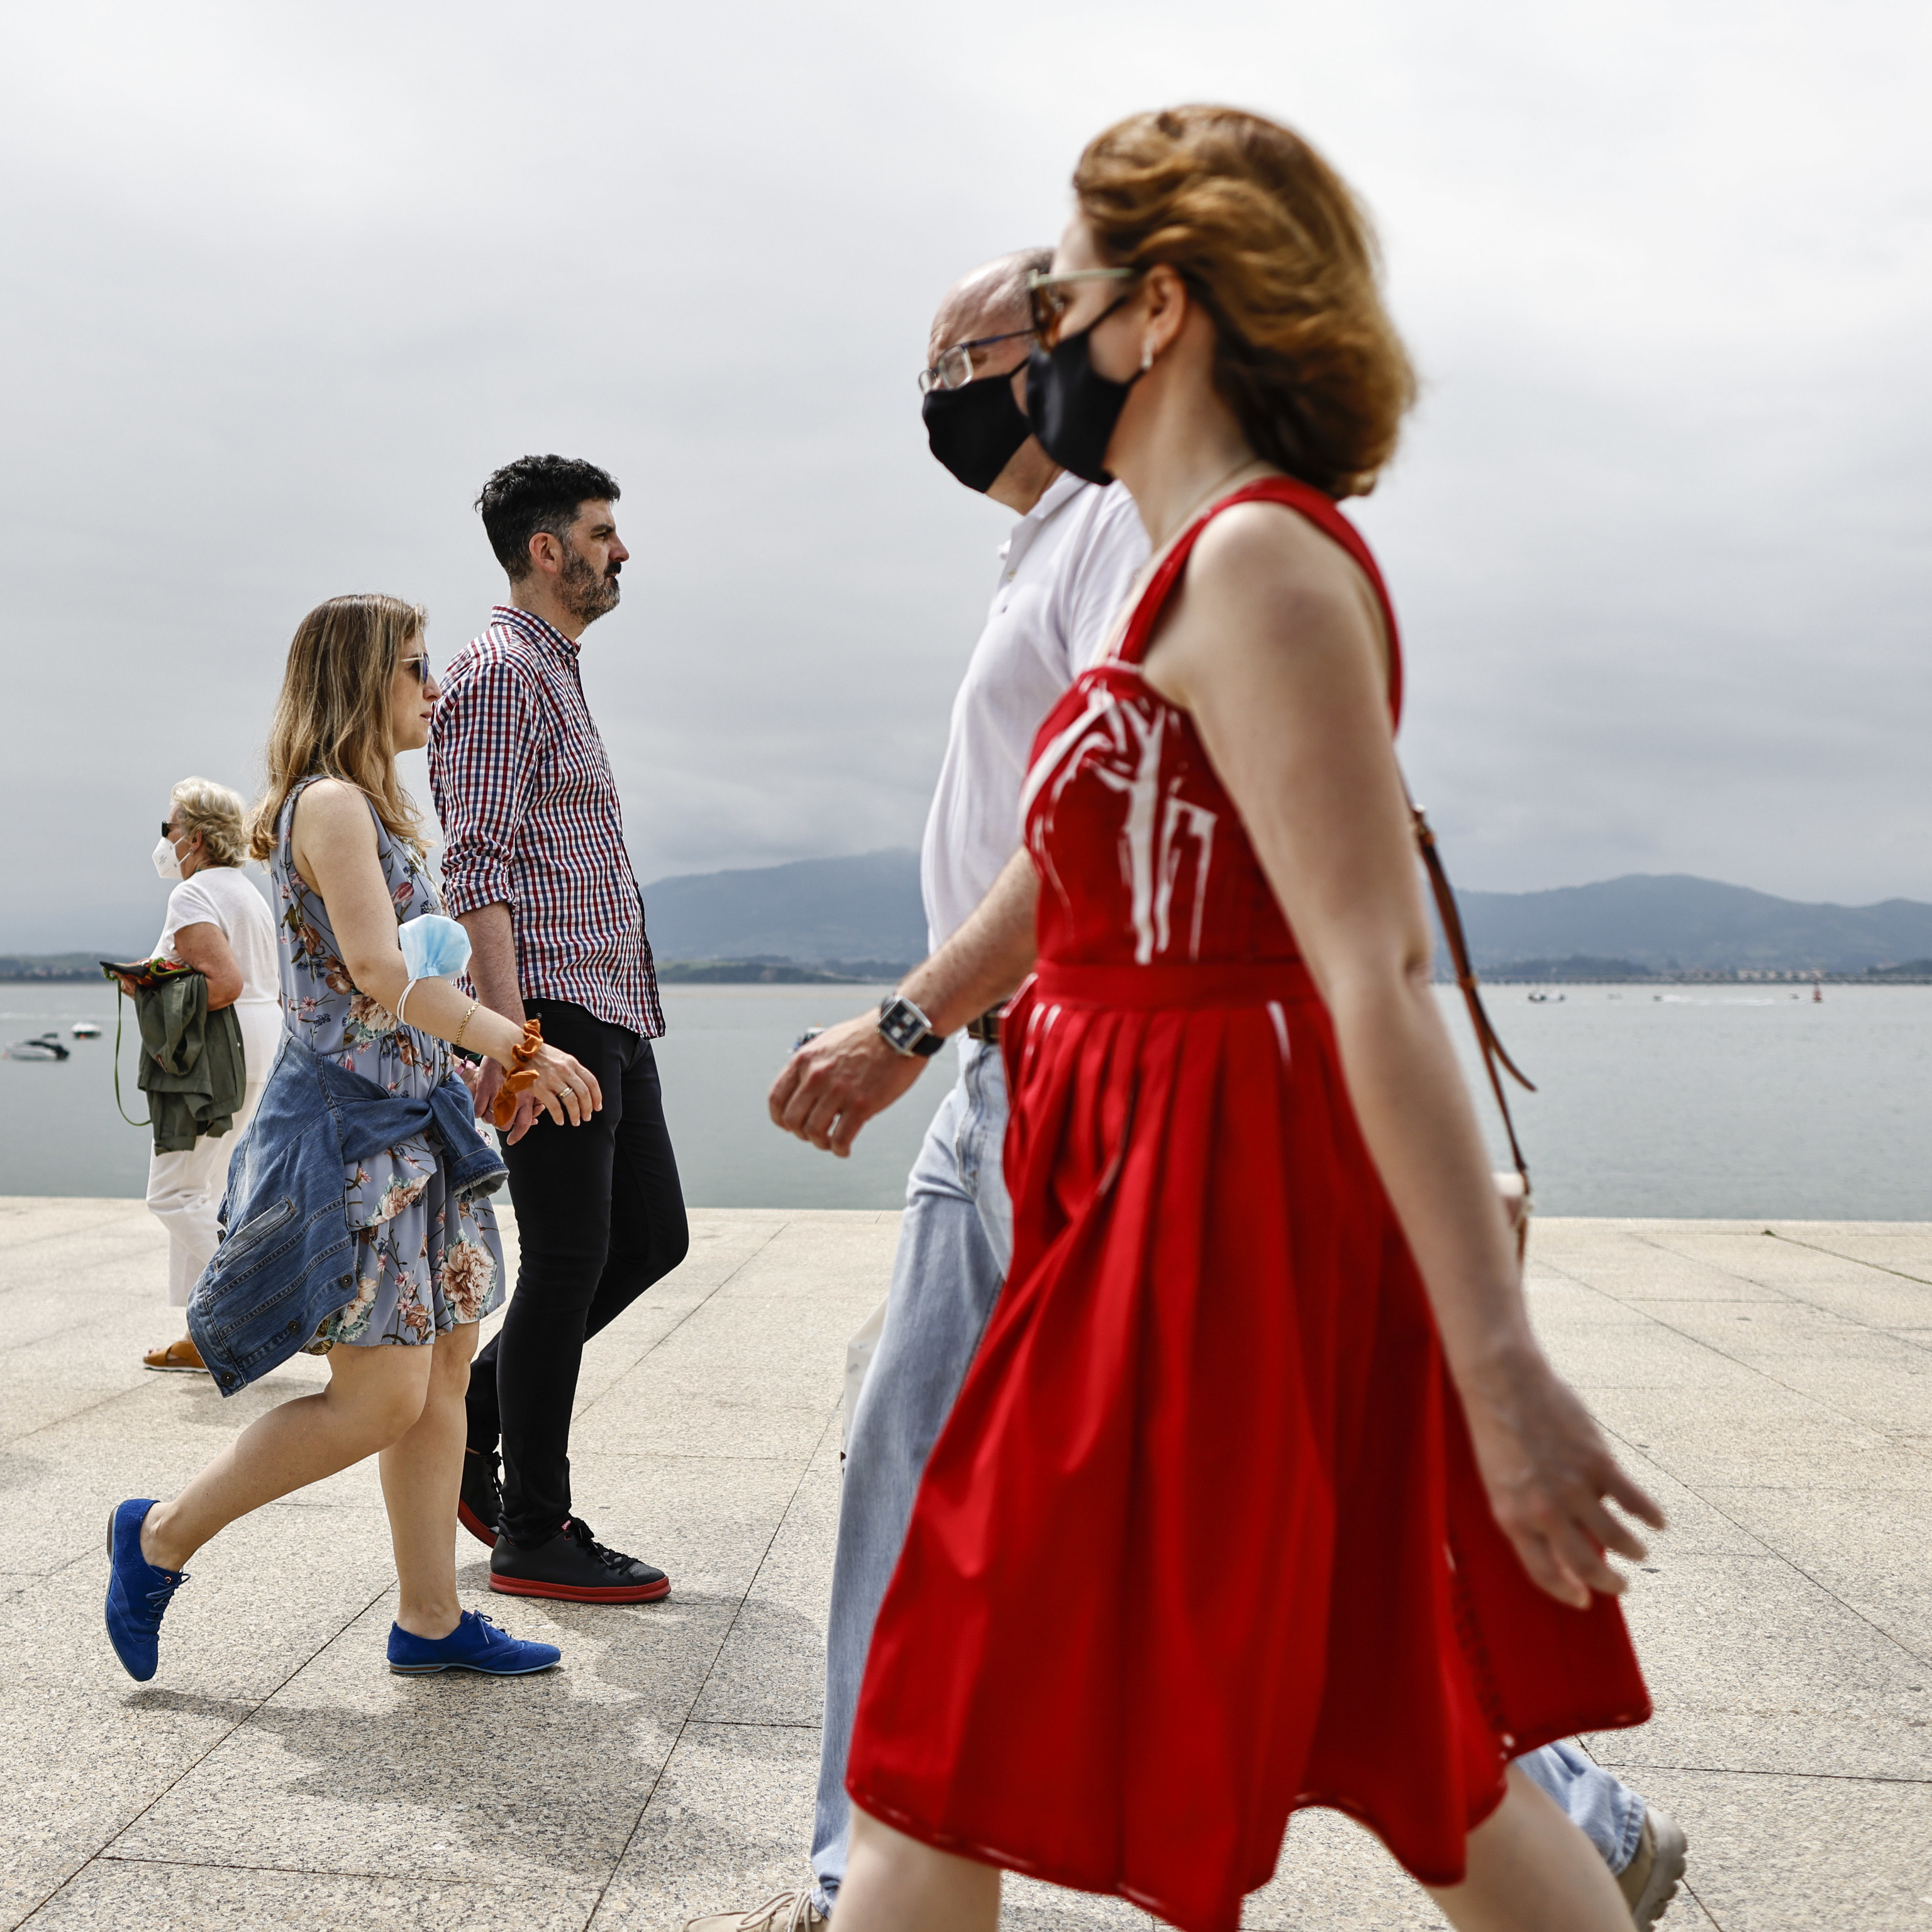 People walking without masks in Santander